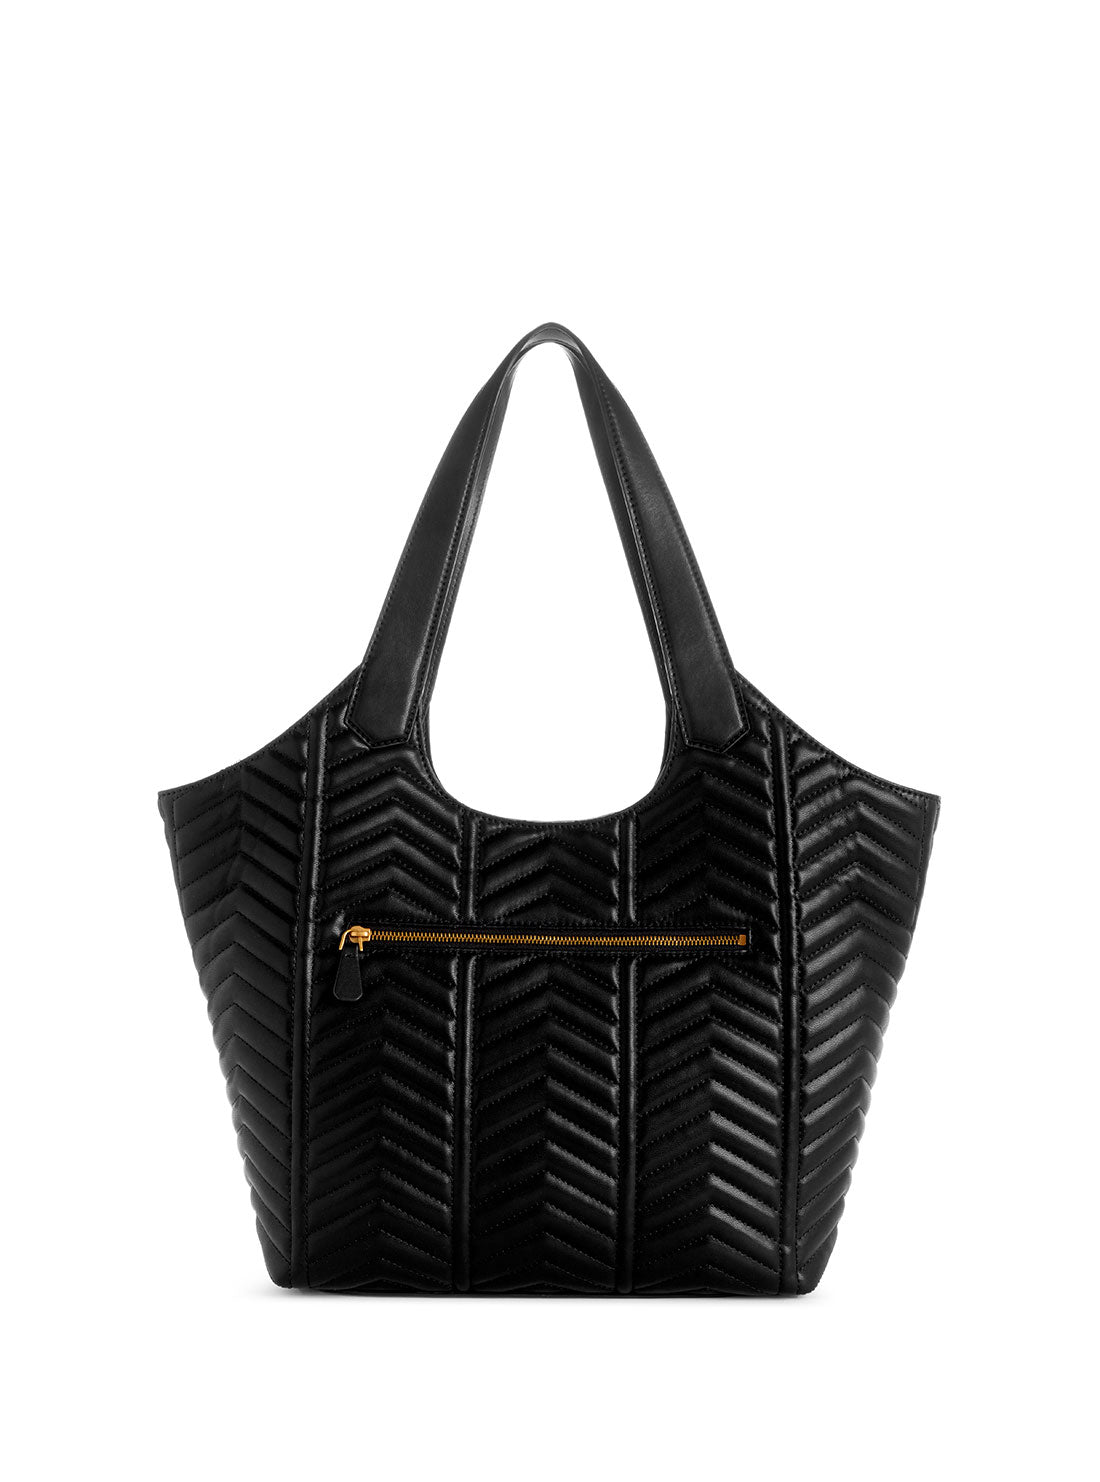 GUESS Women's Black Lovide Tote Bag QB897623 Back View